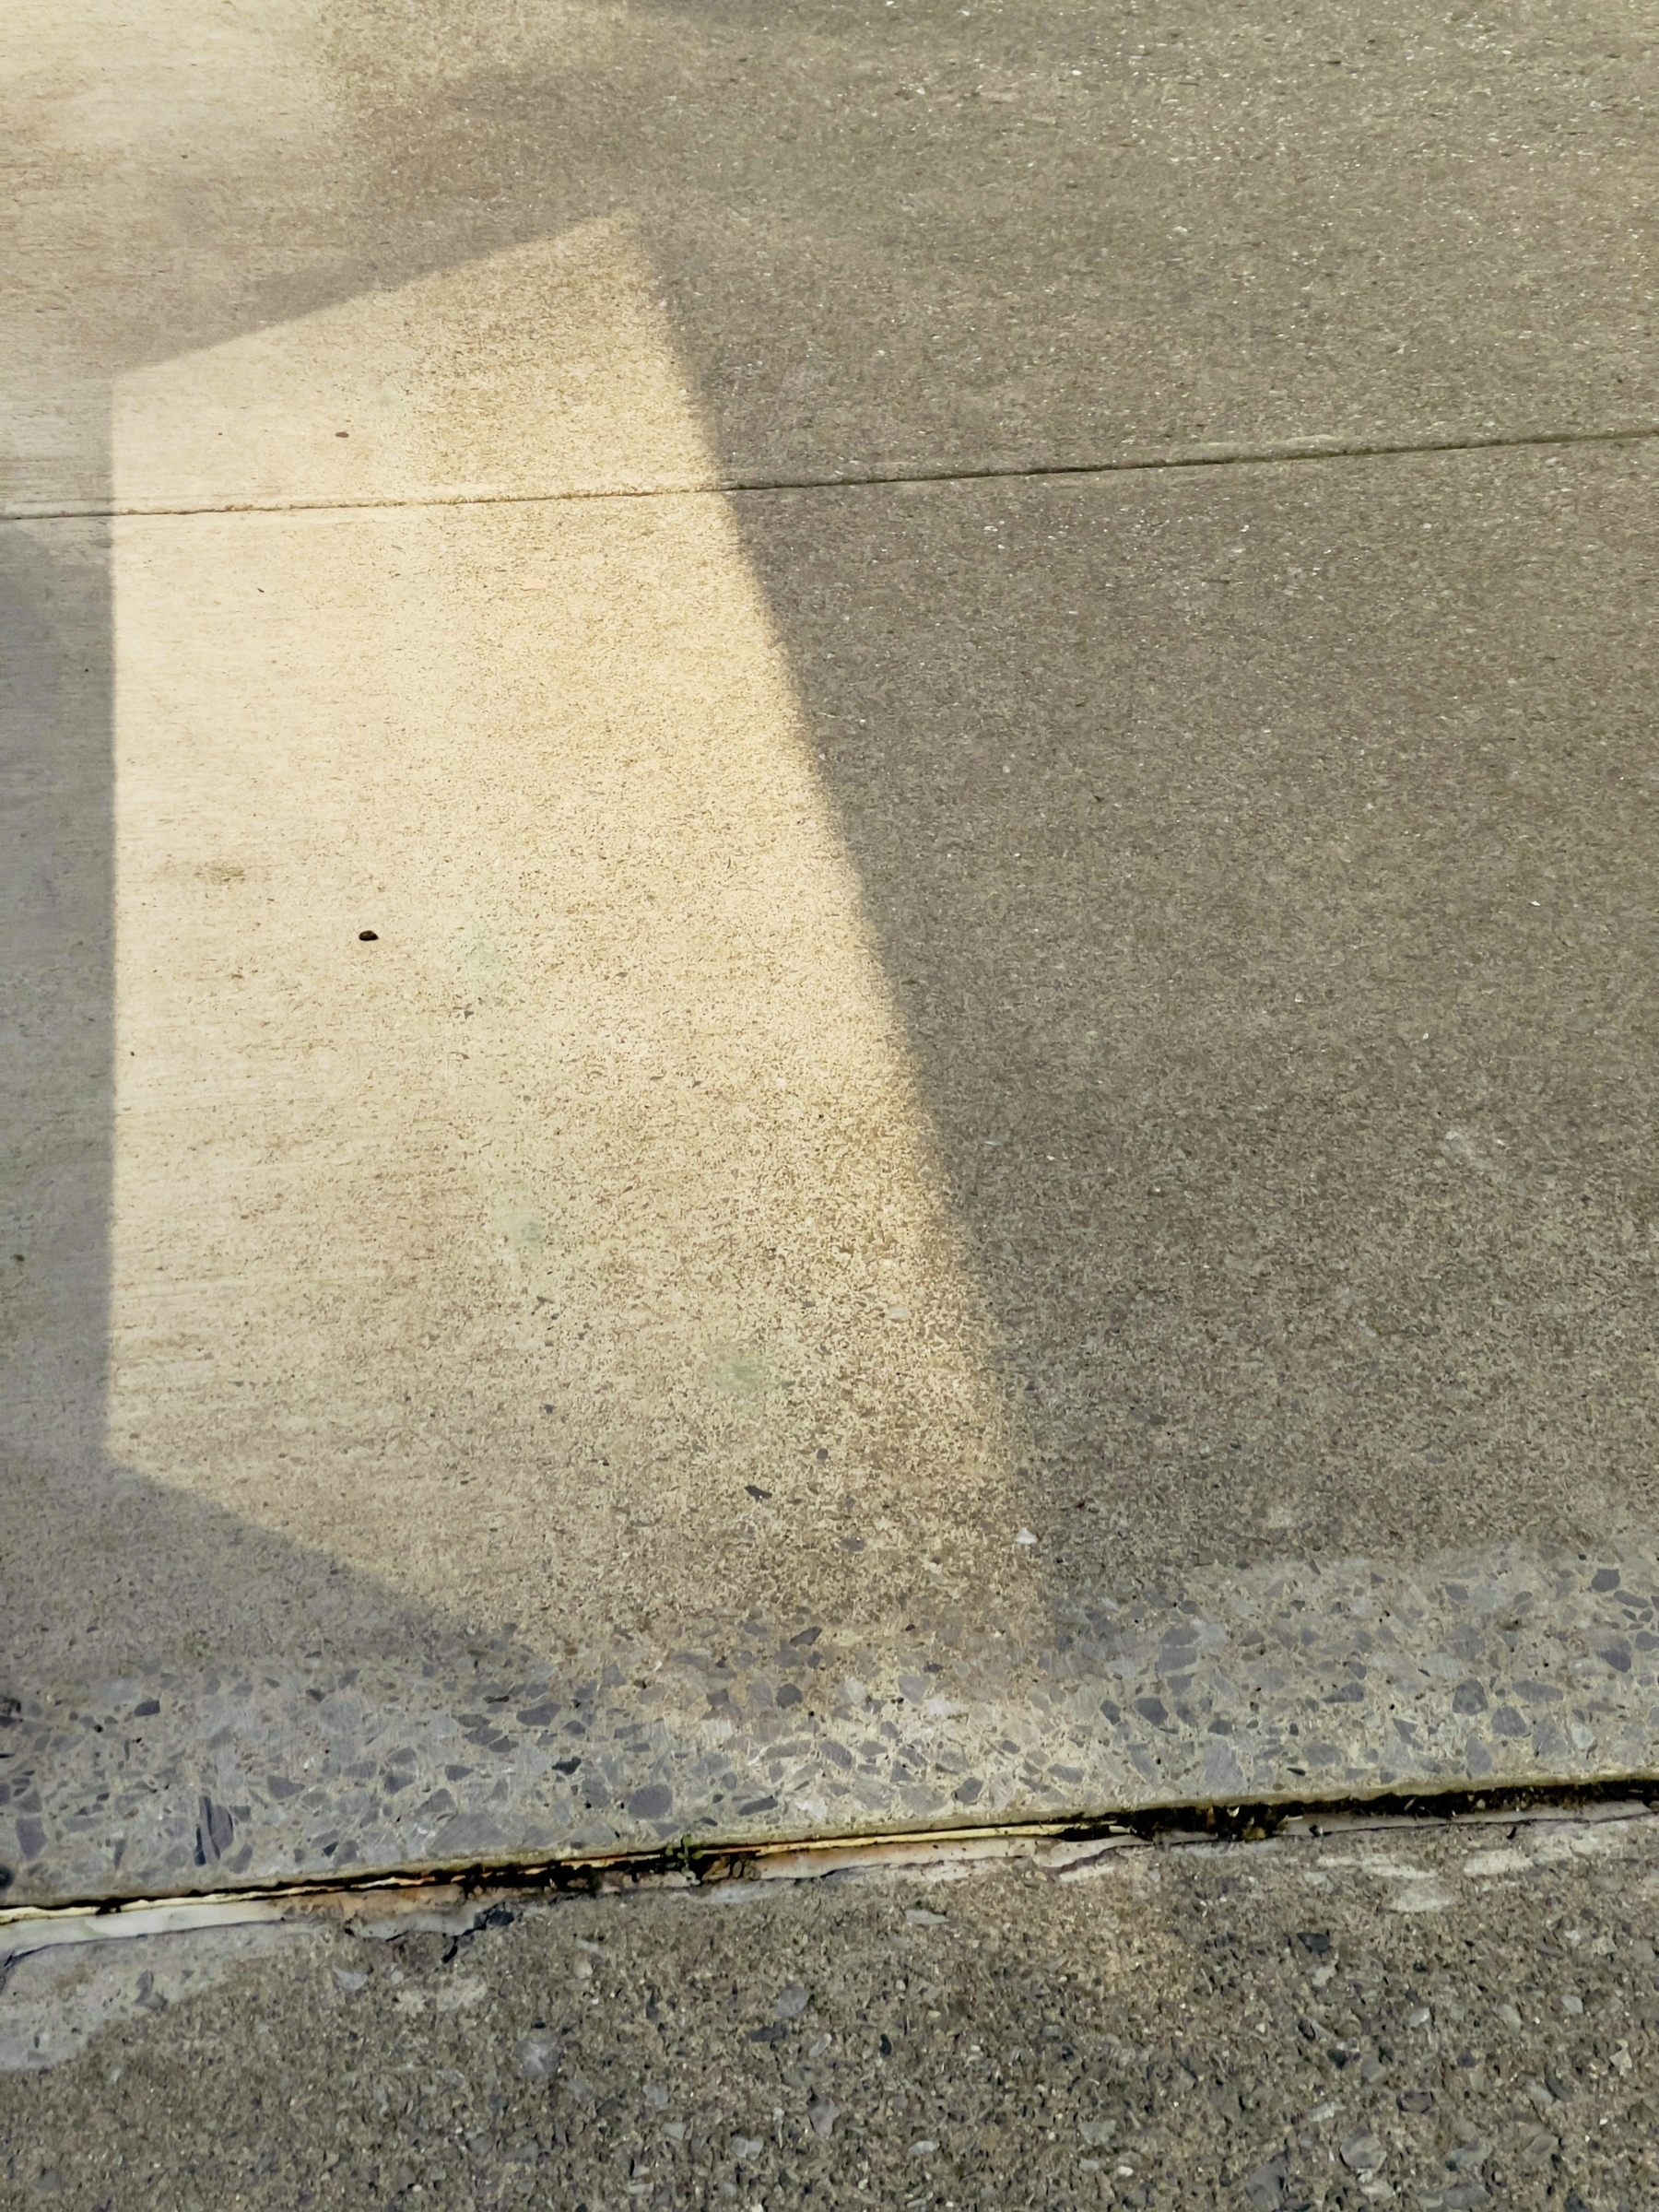 Parallelogram of light on concrete sidewalk.